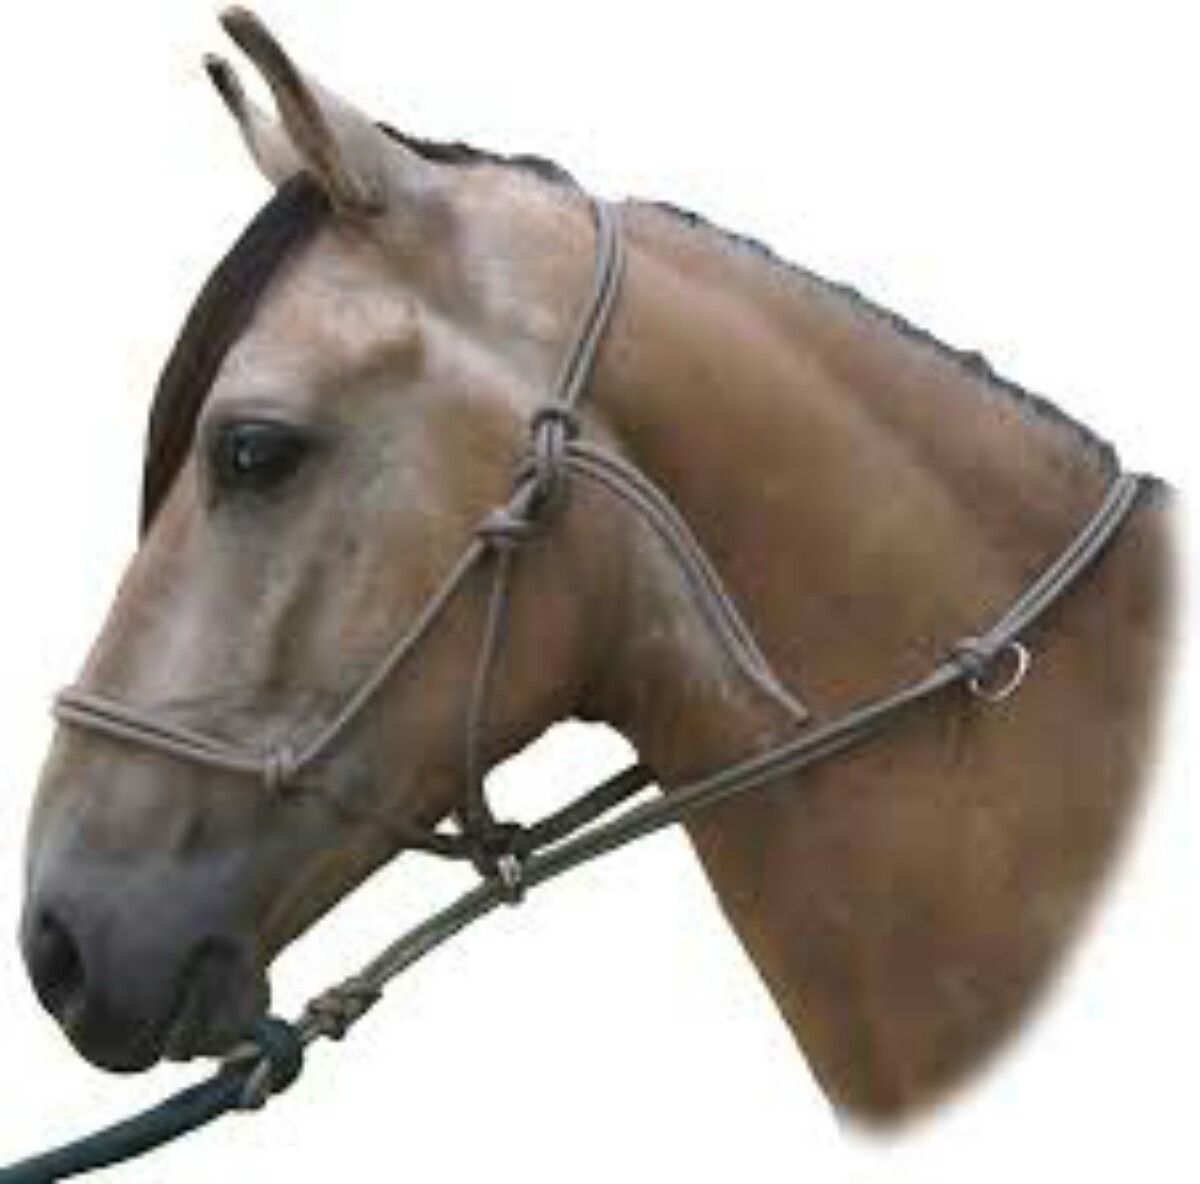 cabezal-sierra-horse-halter-y-de-nudos-D_NQ_NP_112111-MCO20482505236_112015-F.jpg